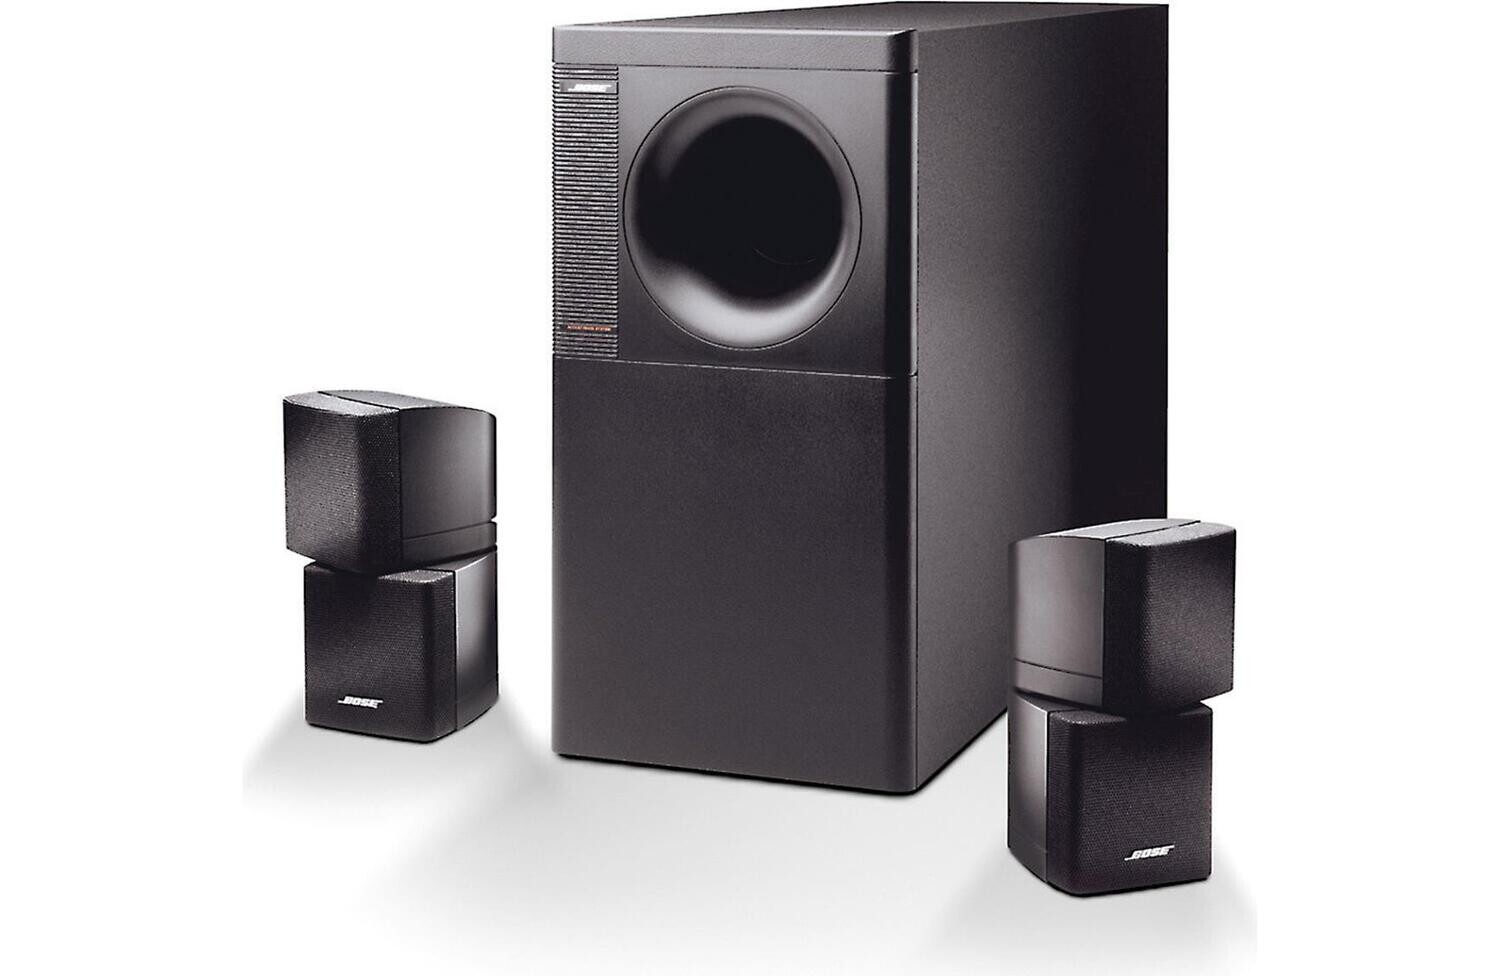 Bose Acoustimass 5 Series III speaker system